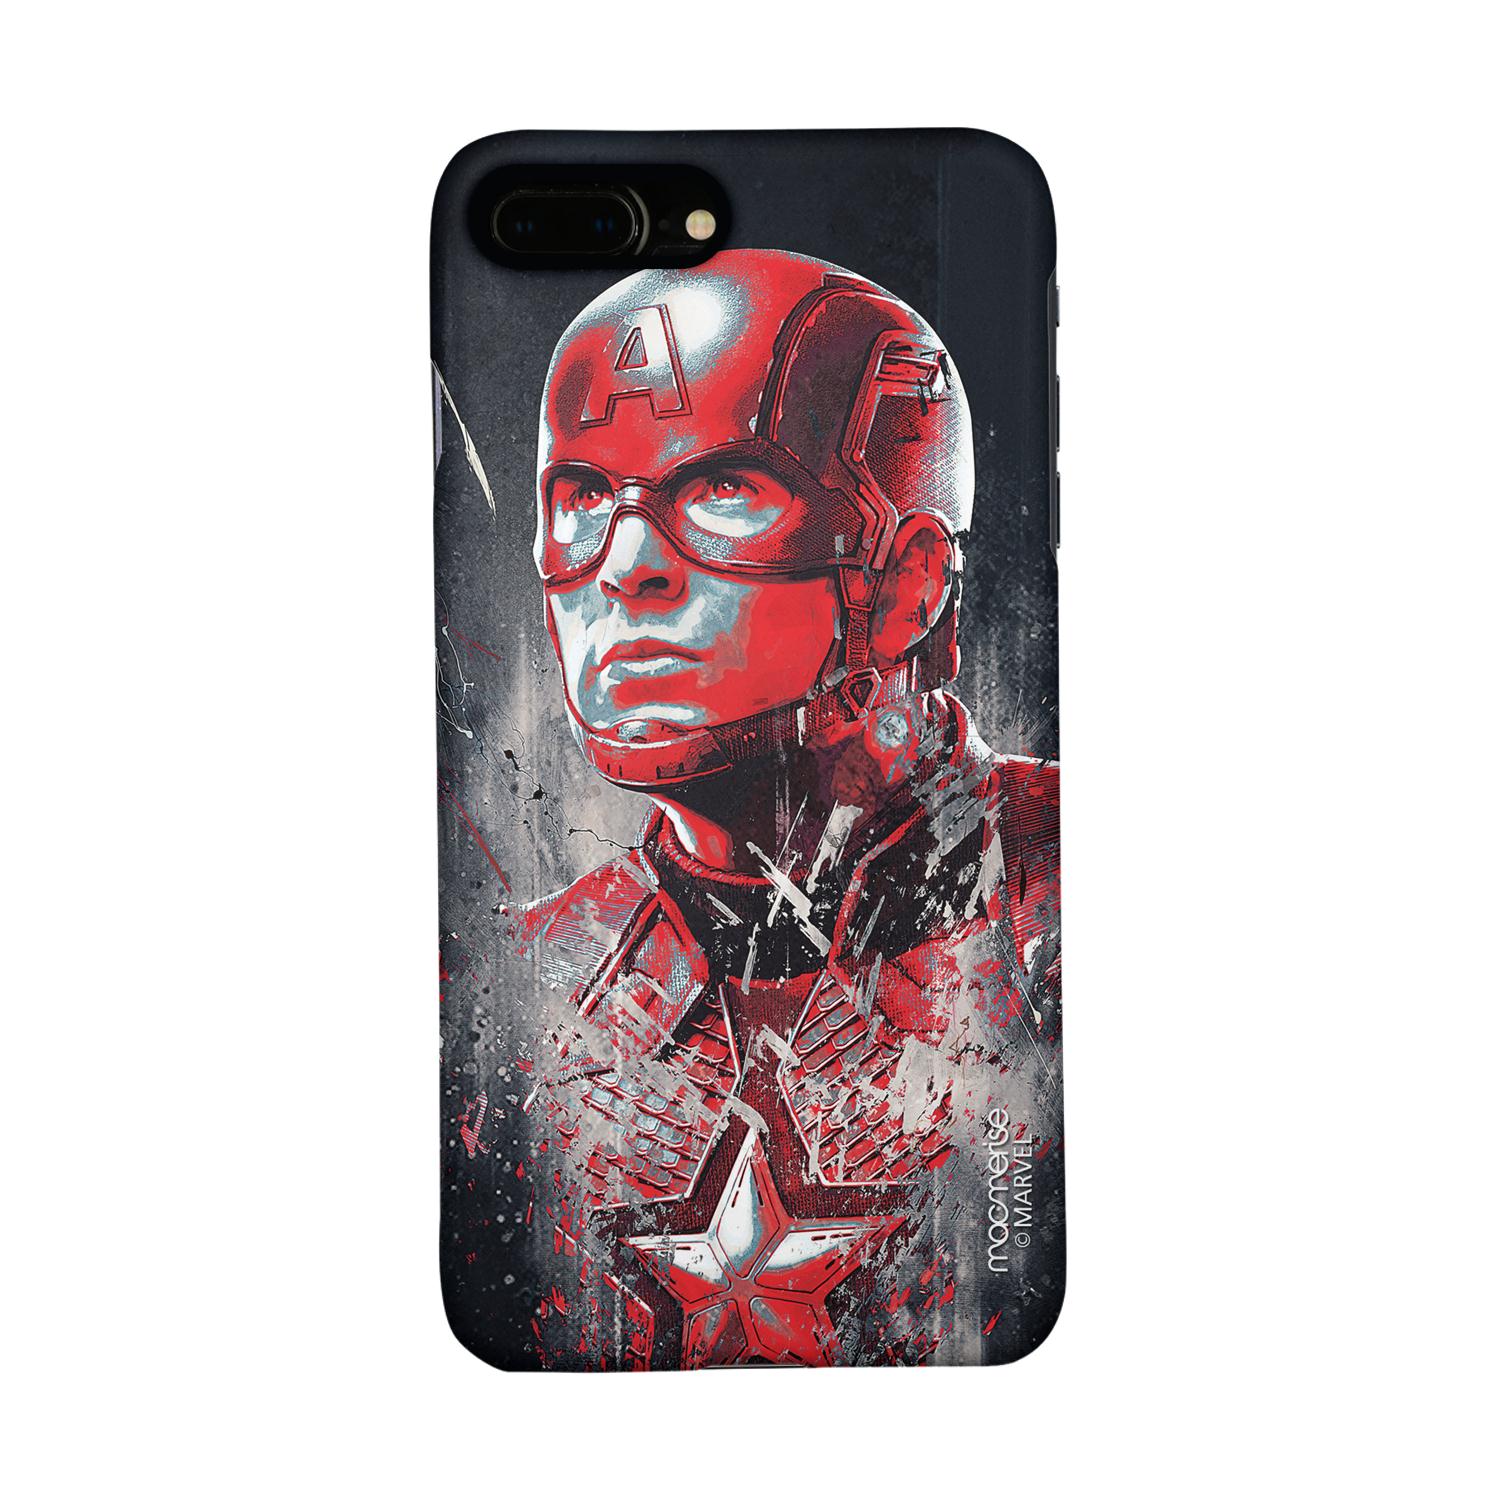 Buy Charcoal Art Captain America - Sleek Phone Case for iPhone 7 Plus Online